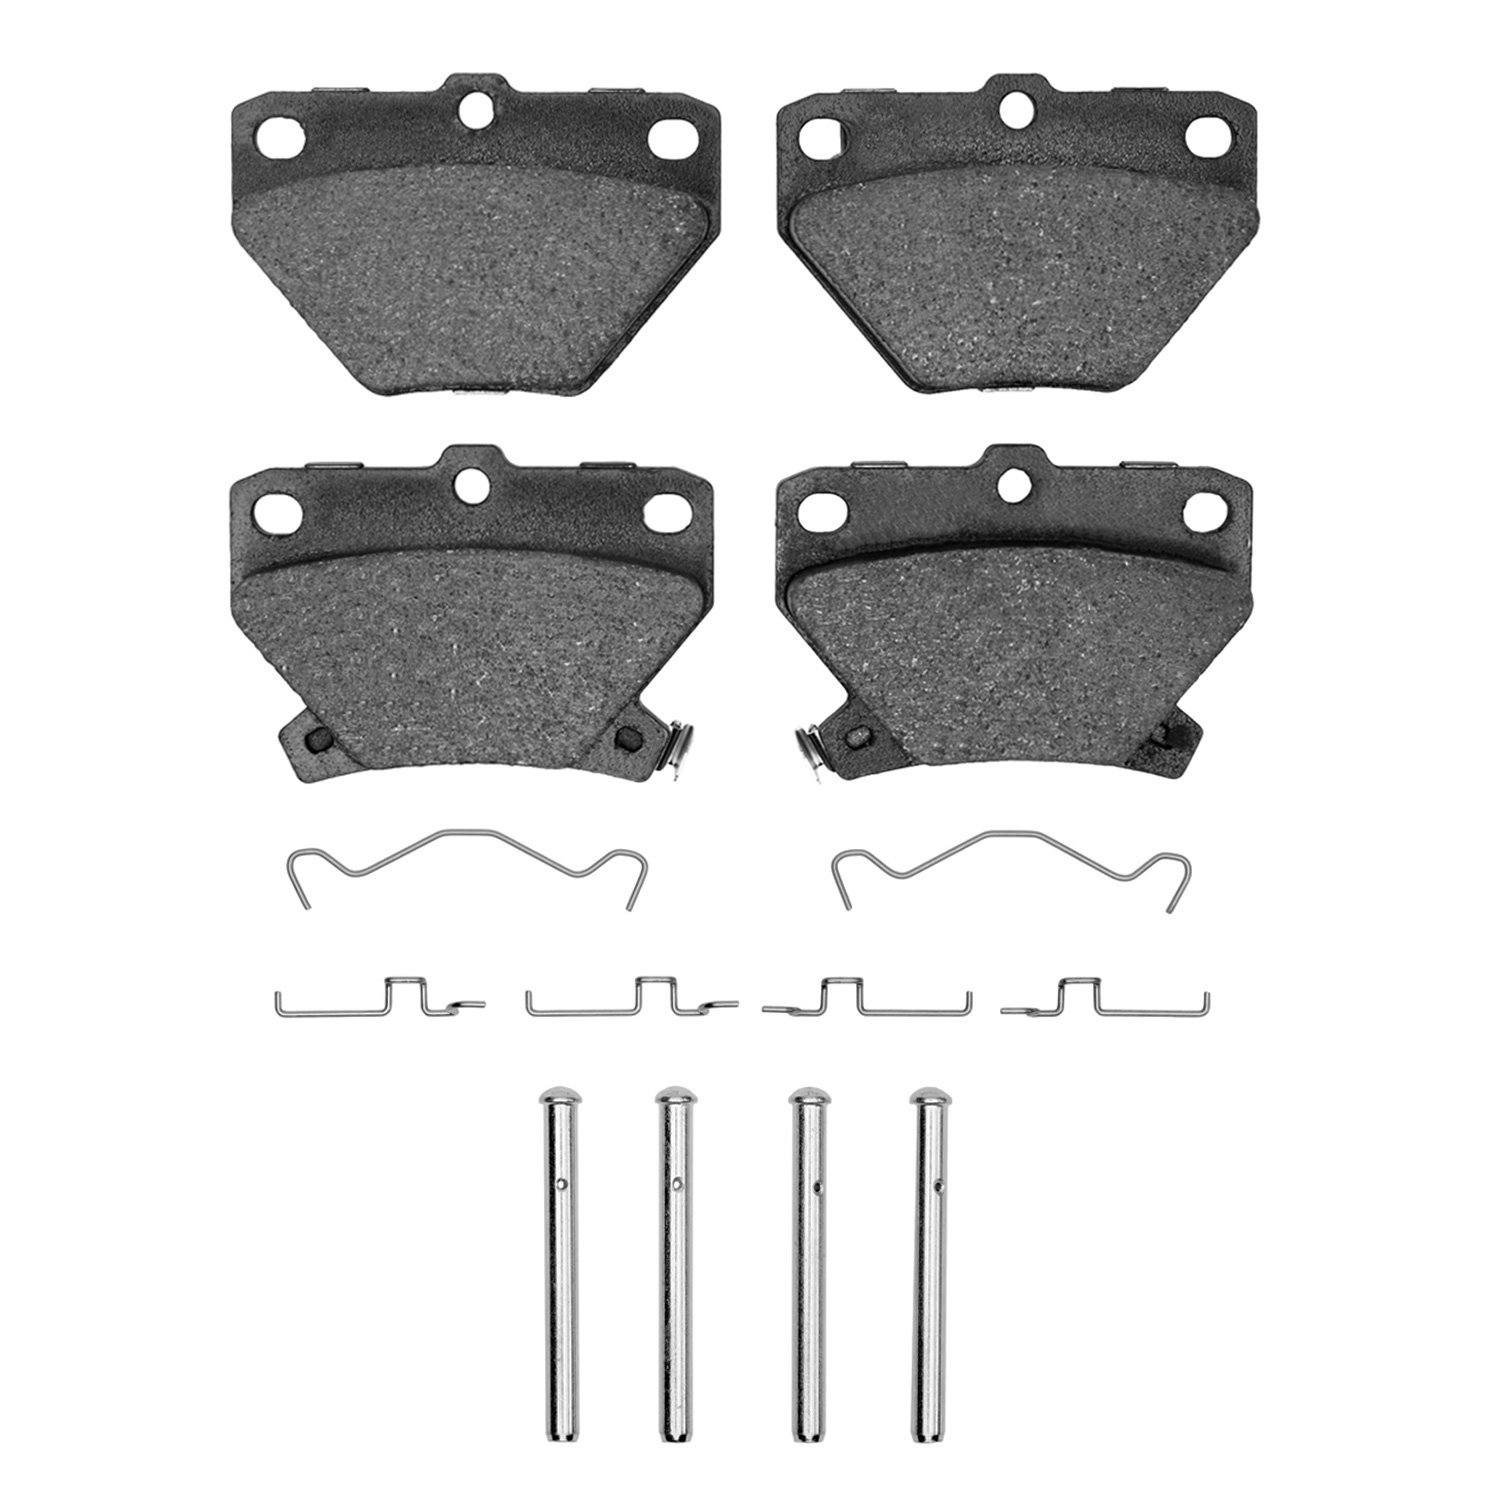 Ceramic Brake Pads & Hardware Kit, 2000-2008 Fits Multiple Makes/Models, Position: Rear